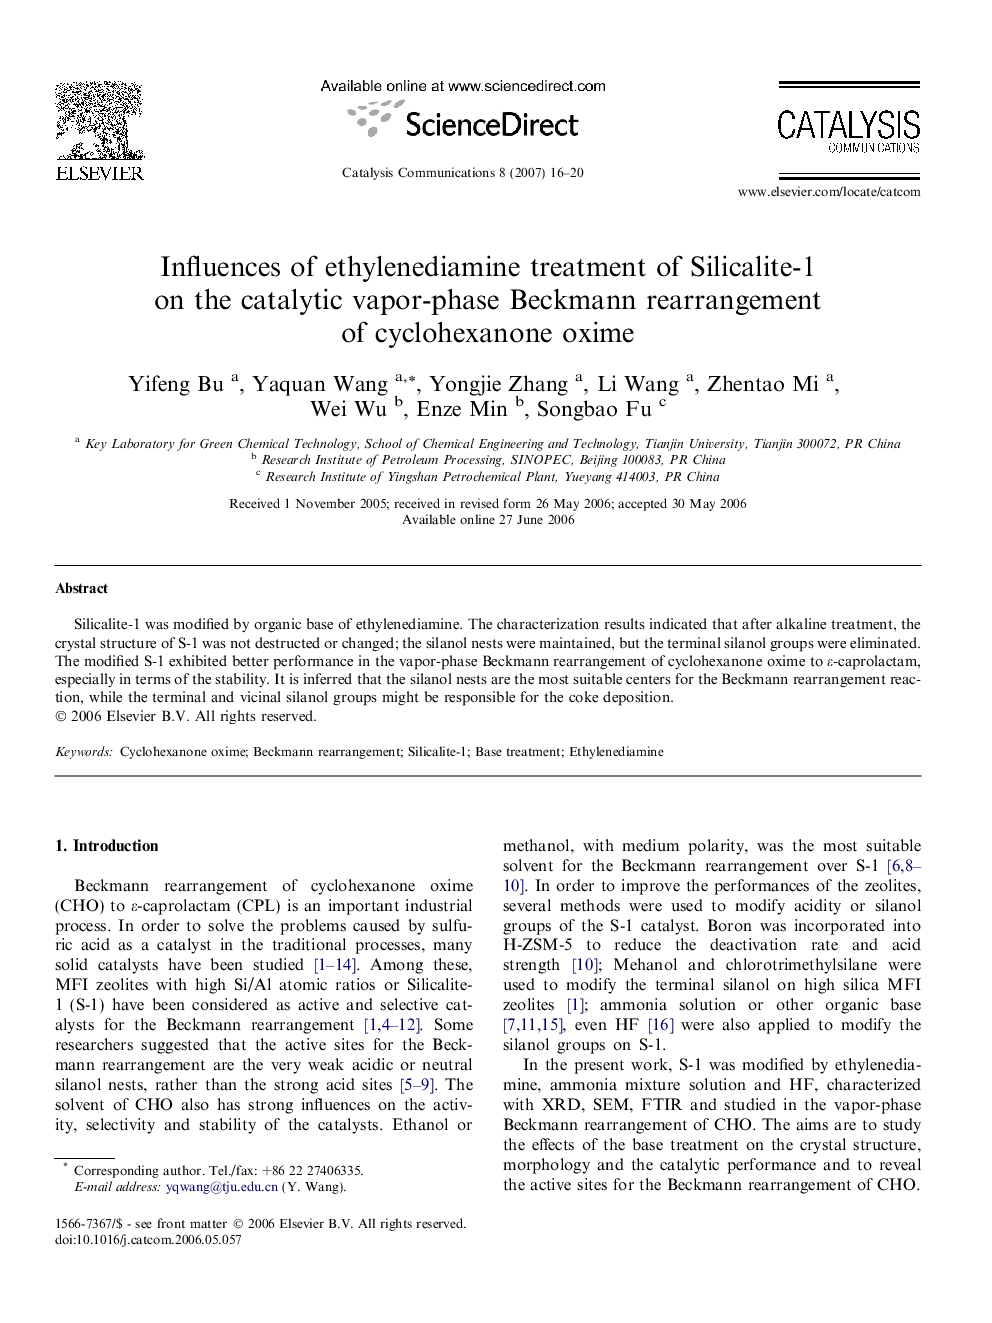 Influences of ethylenediamine treatment of Silicalite-1 on the catalytic vapor-phase Beckmann rearrangement of cyclohexanone oxime